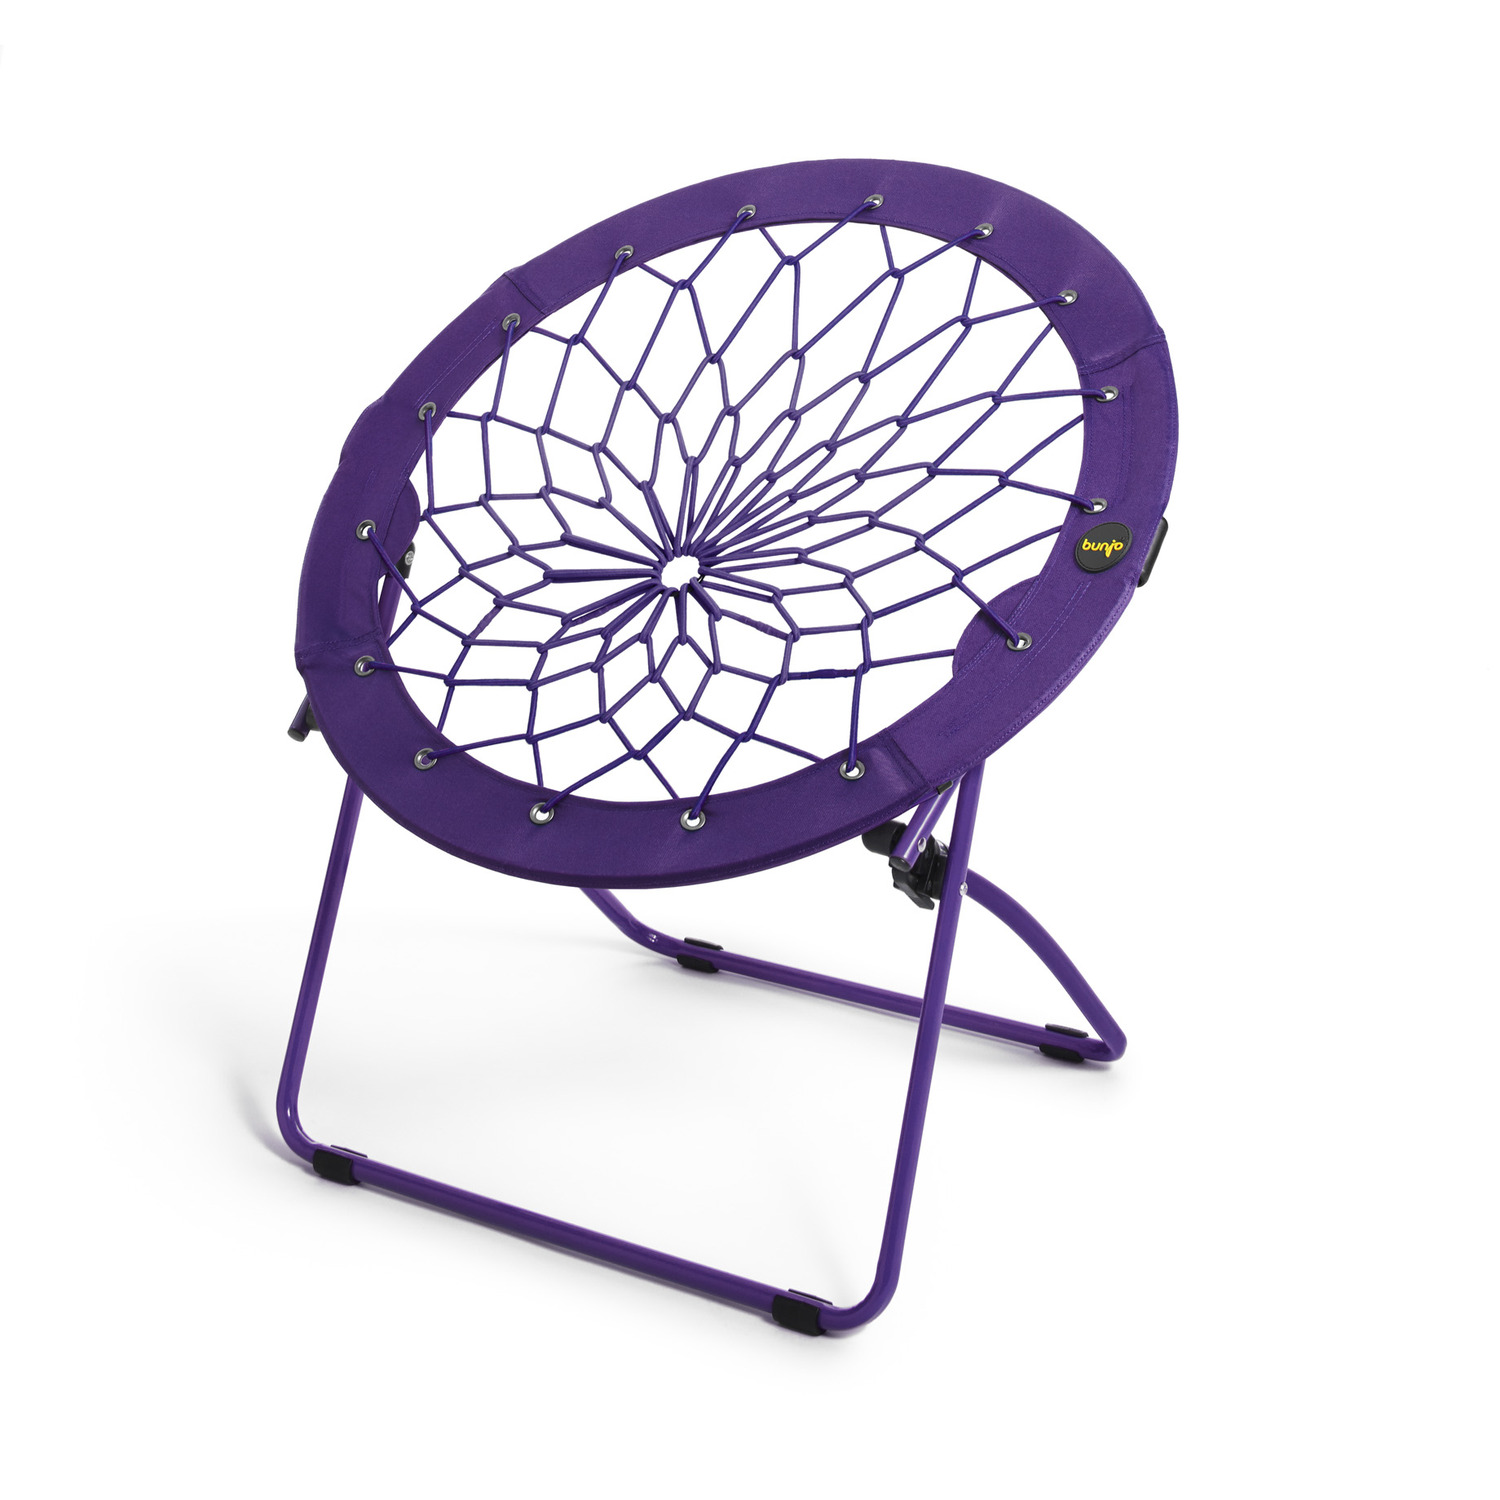 32" Bunjo Woven Bungee with Metal Base Folding Chair, Purple -